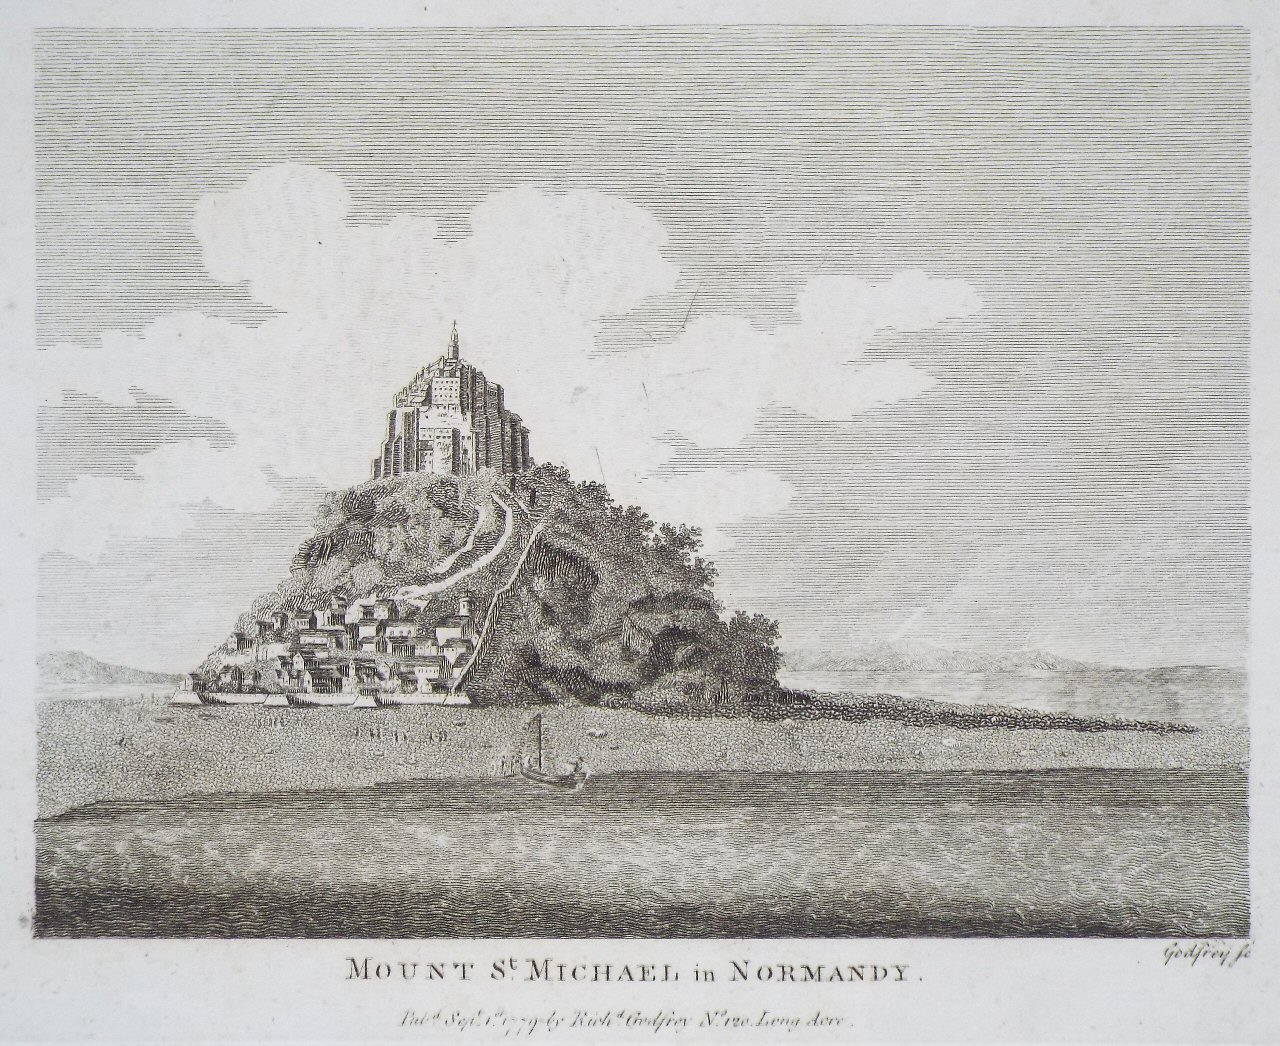 Print - Mount St. Michael in Normandy. - Godfrey